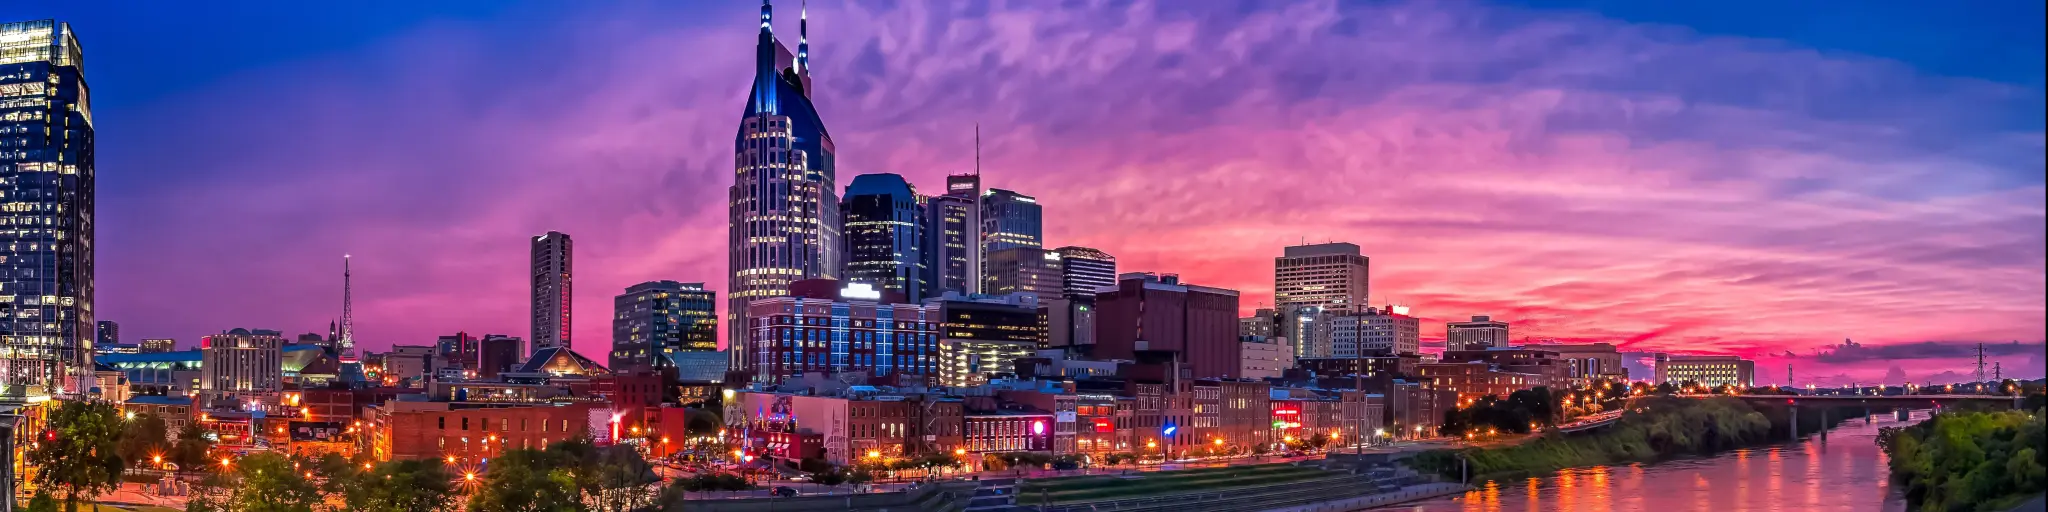 Nashville Skyline at sunset with buildings set against a purple sky